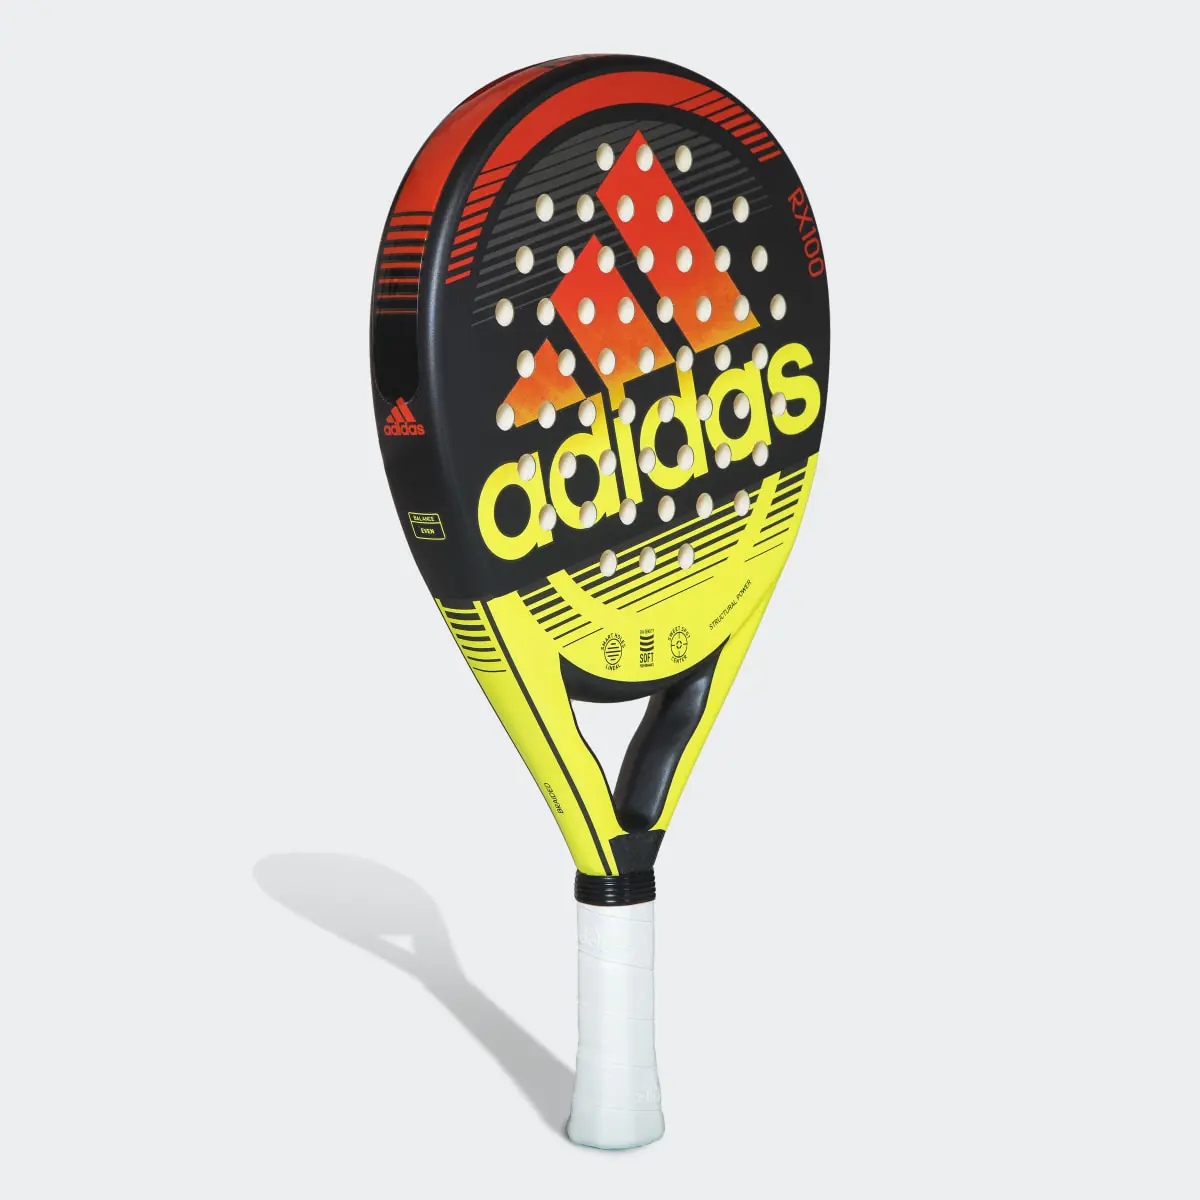 Adidas RX 100 Racquet. 3